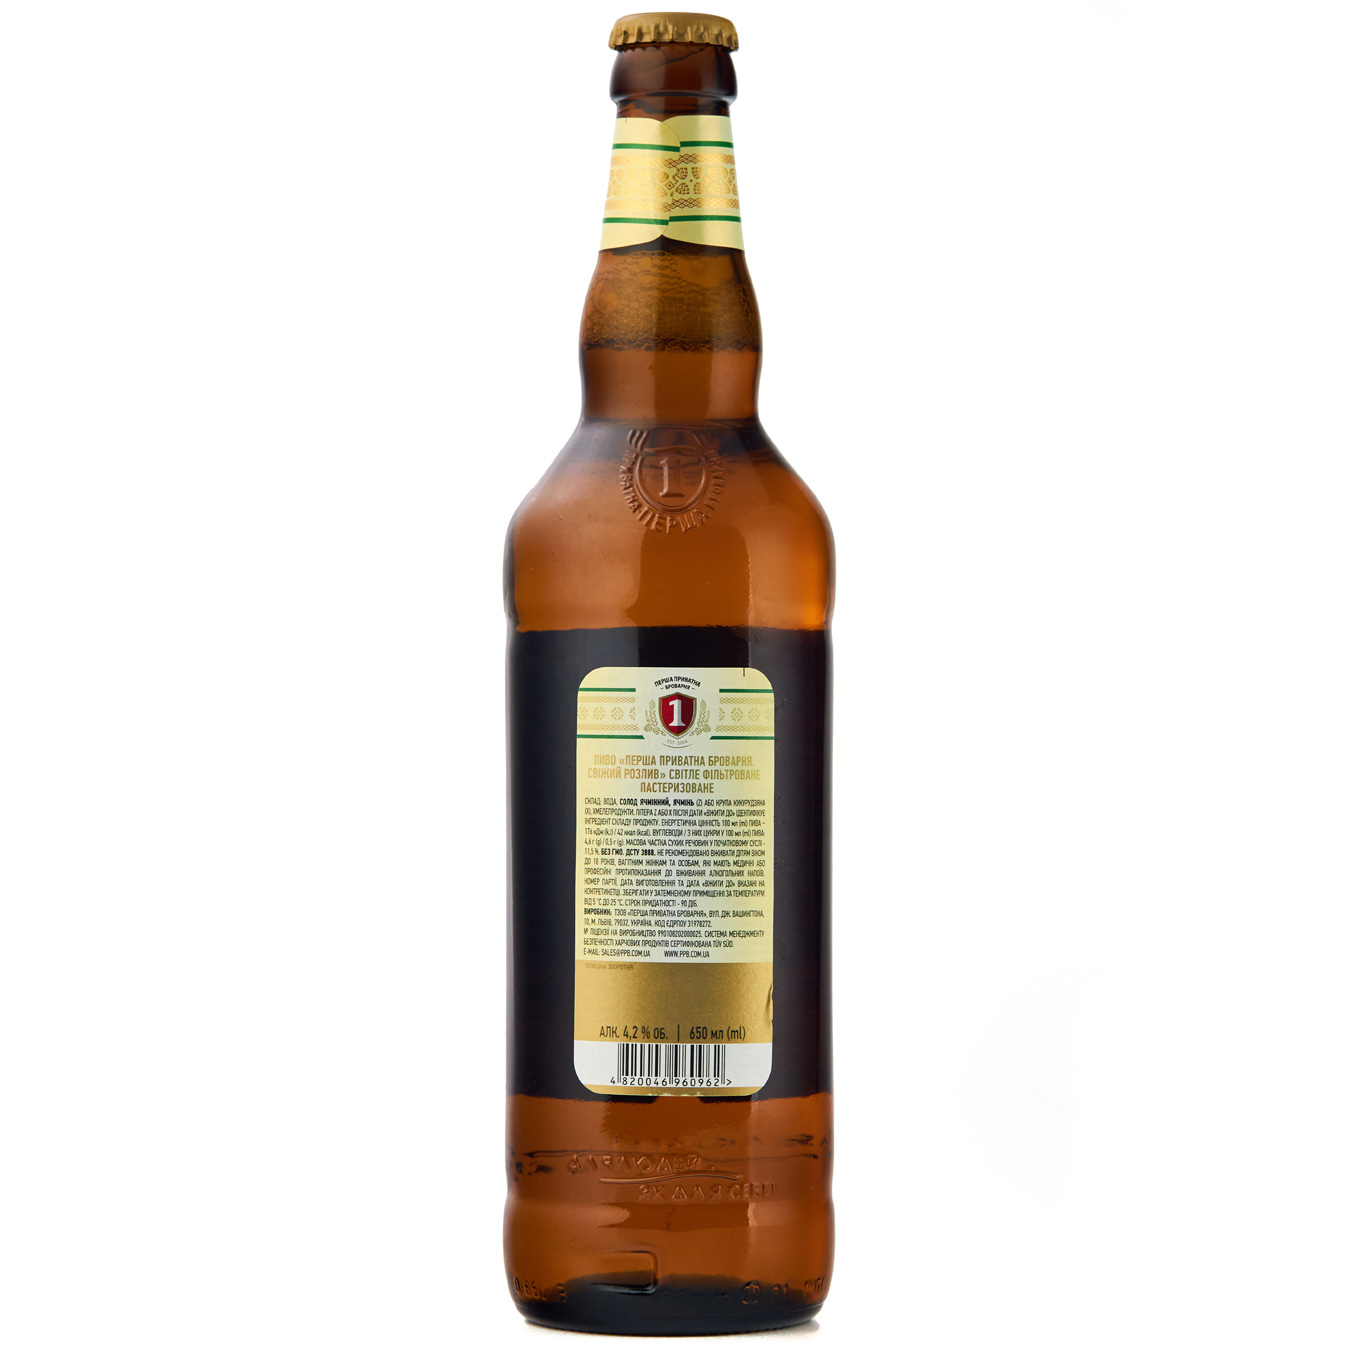 Persha privatna brovarnya Beer light 4,8% 0,65l 2